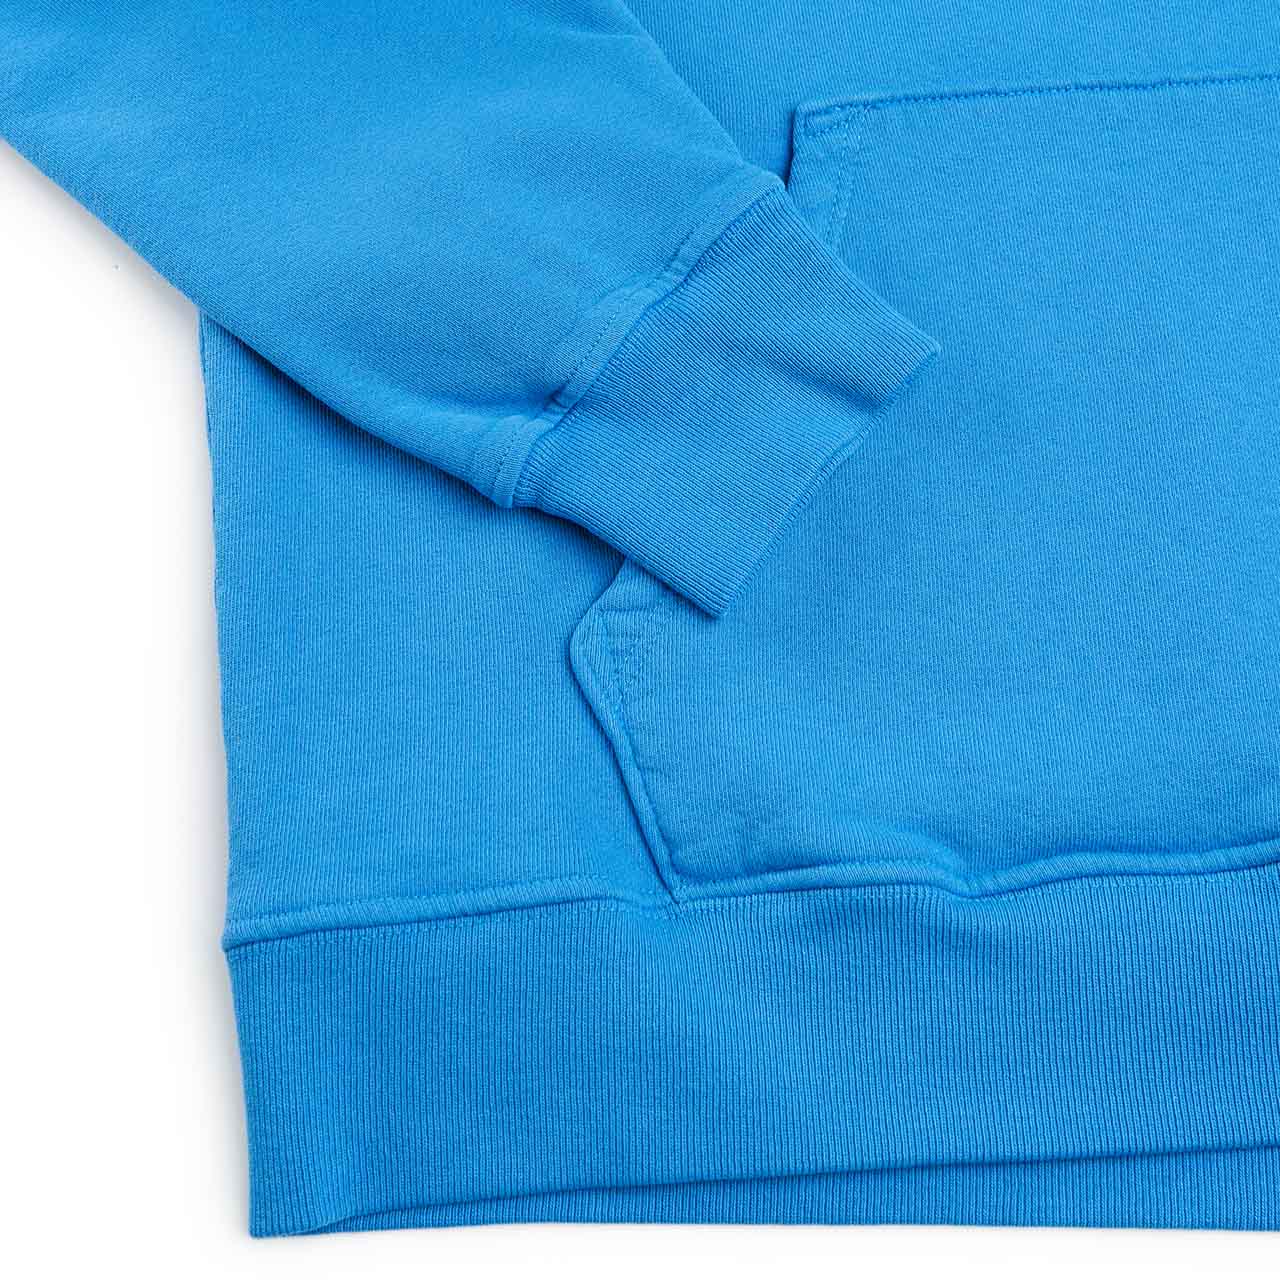 bianca chandôn lover 10th anniversary pullover hood (blue)